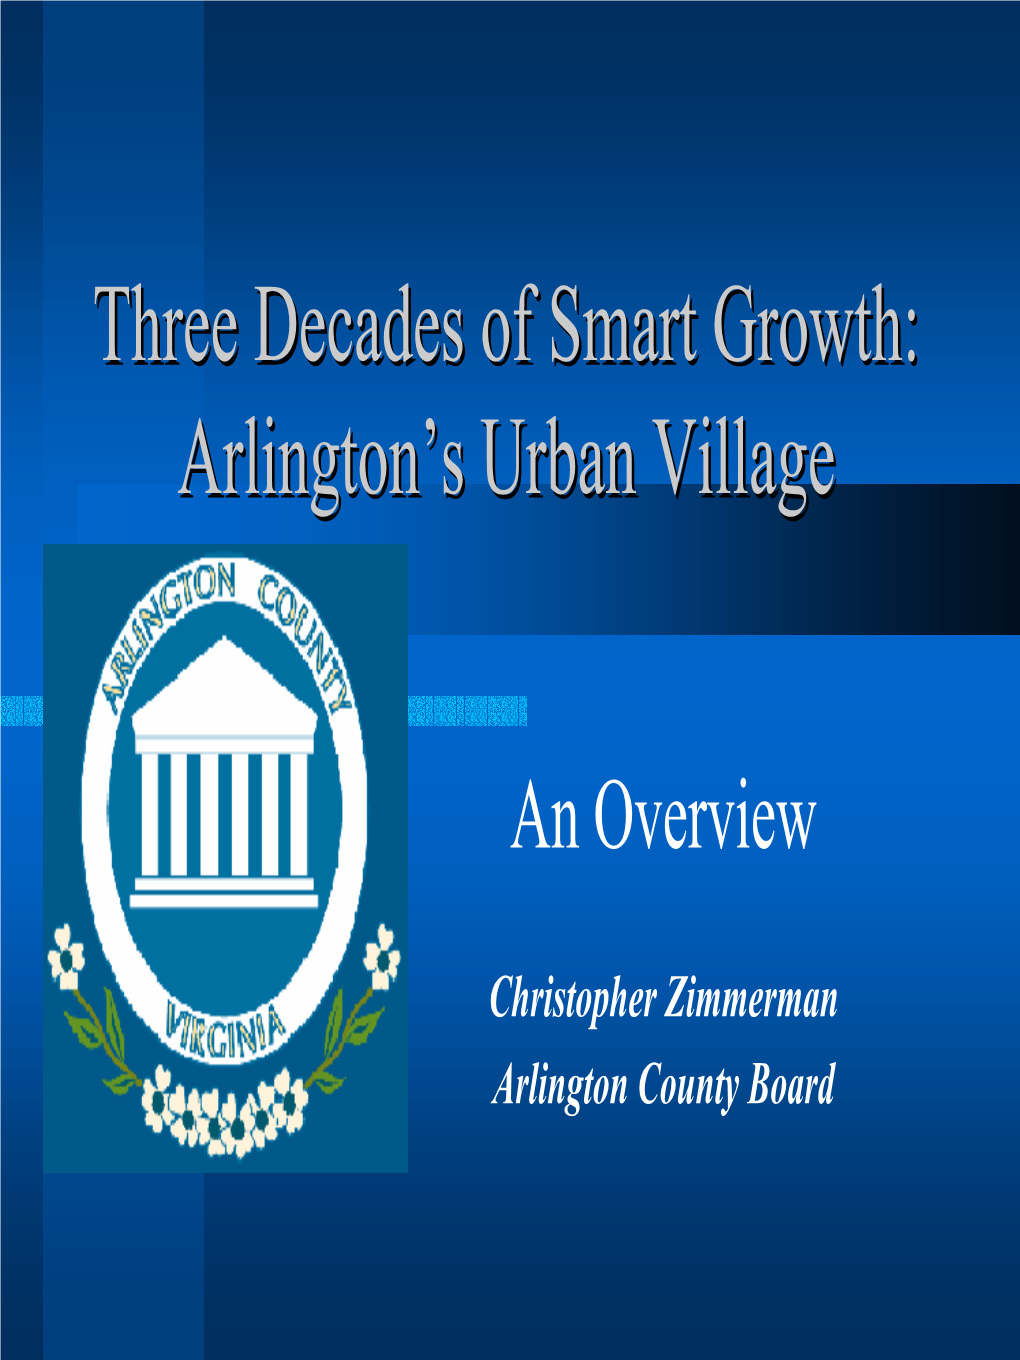 Arlington's Urban Village